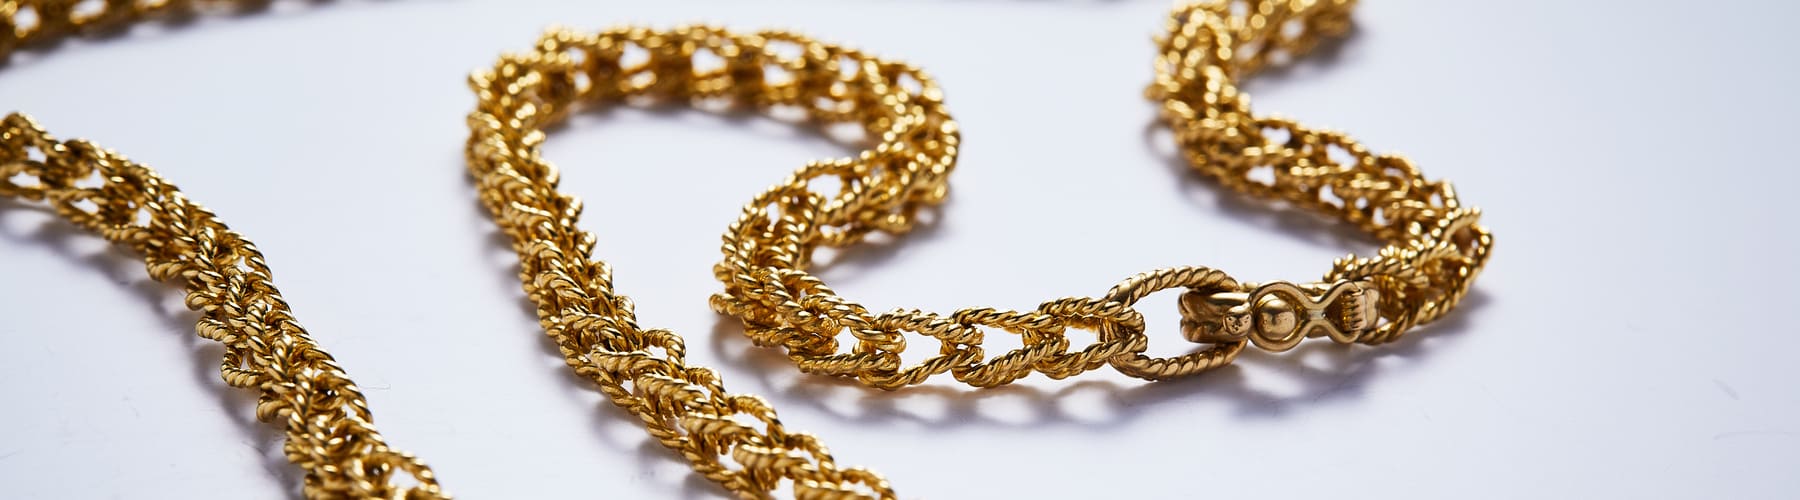 Necklaces Chains